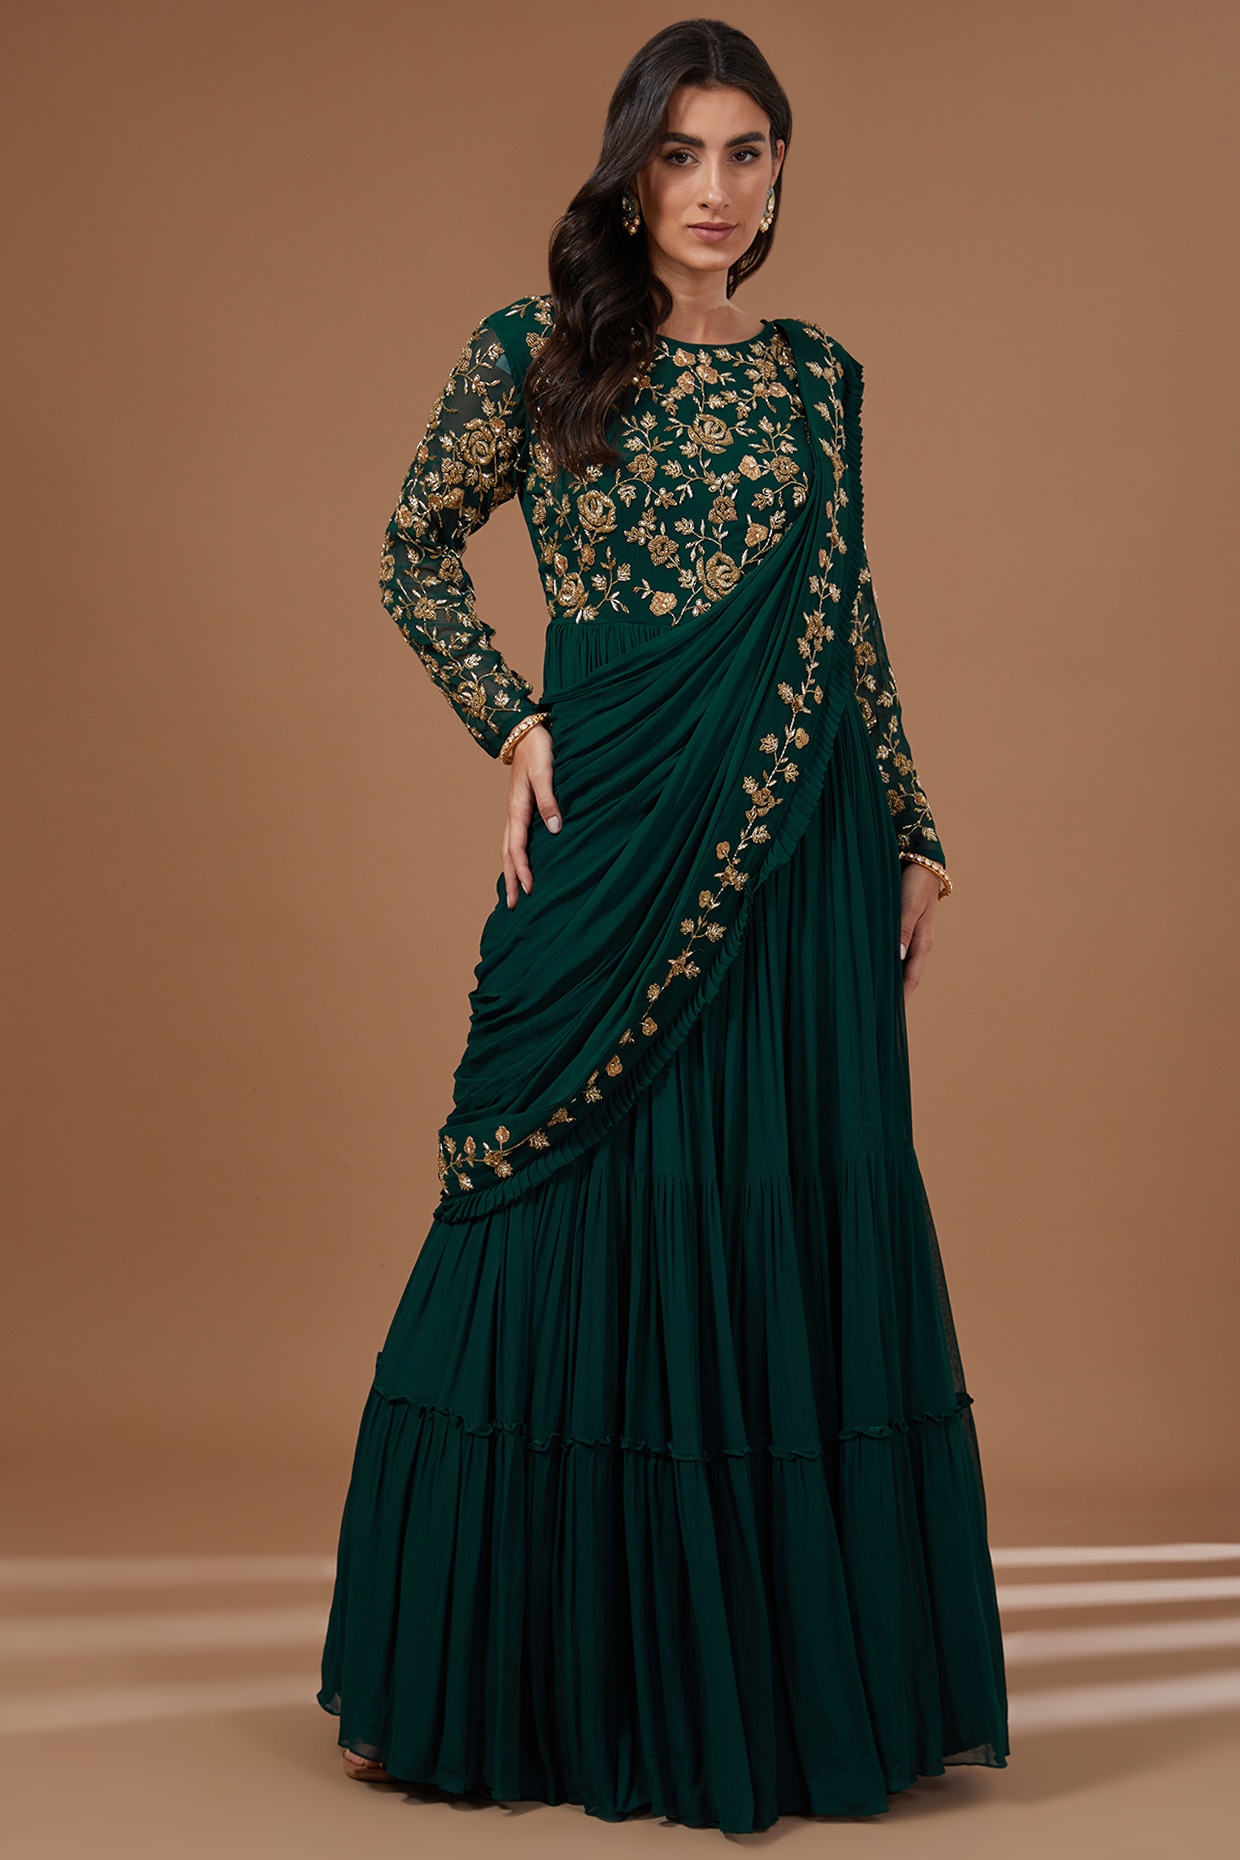 Stunning Diah Nicolas in Gold Lehenga Gown – South India Fashion